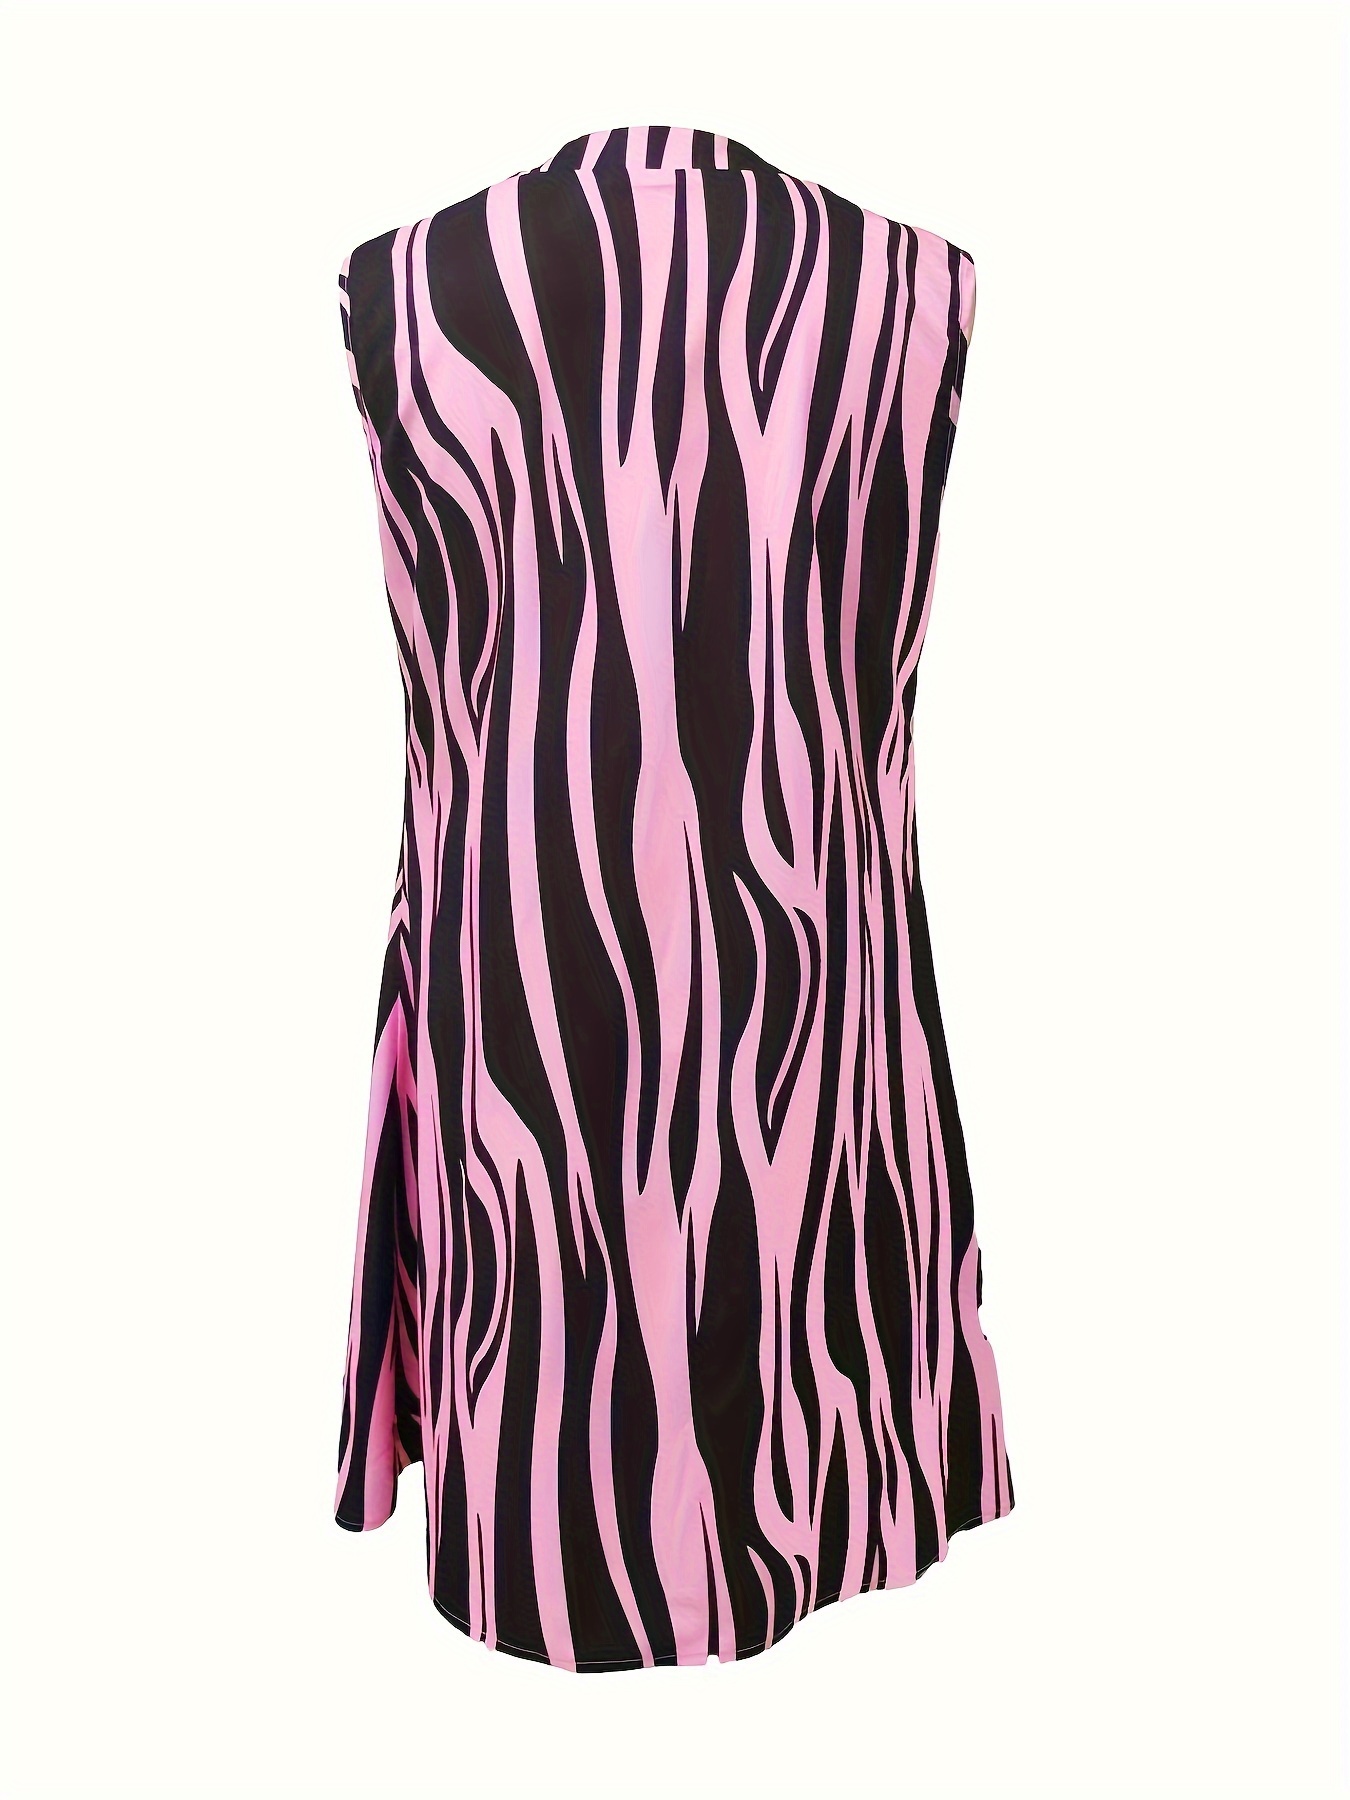 abstract ripple print dress casual v neck sleeveless dress womens clothing details 21